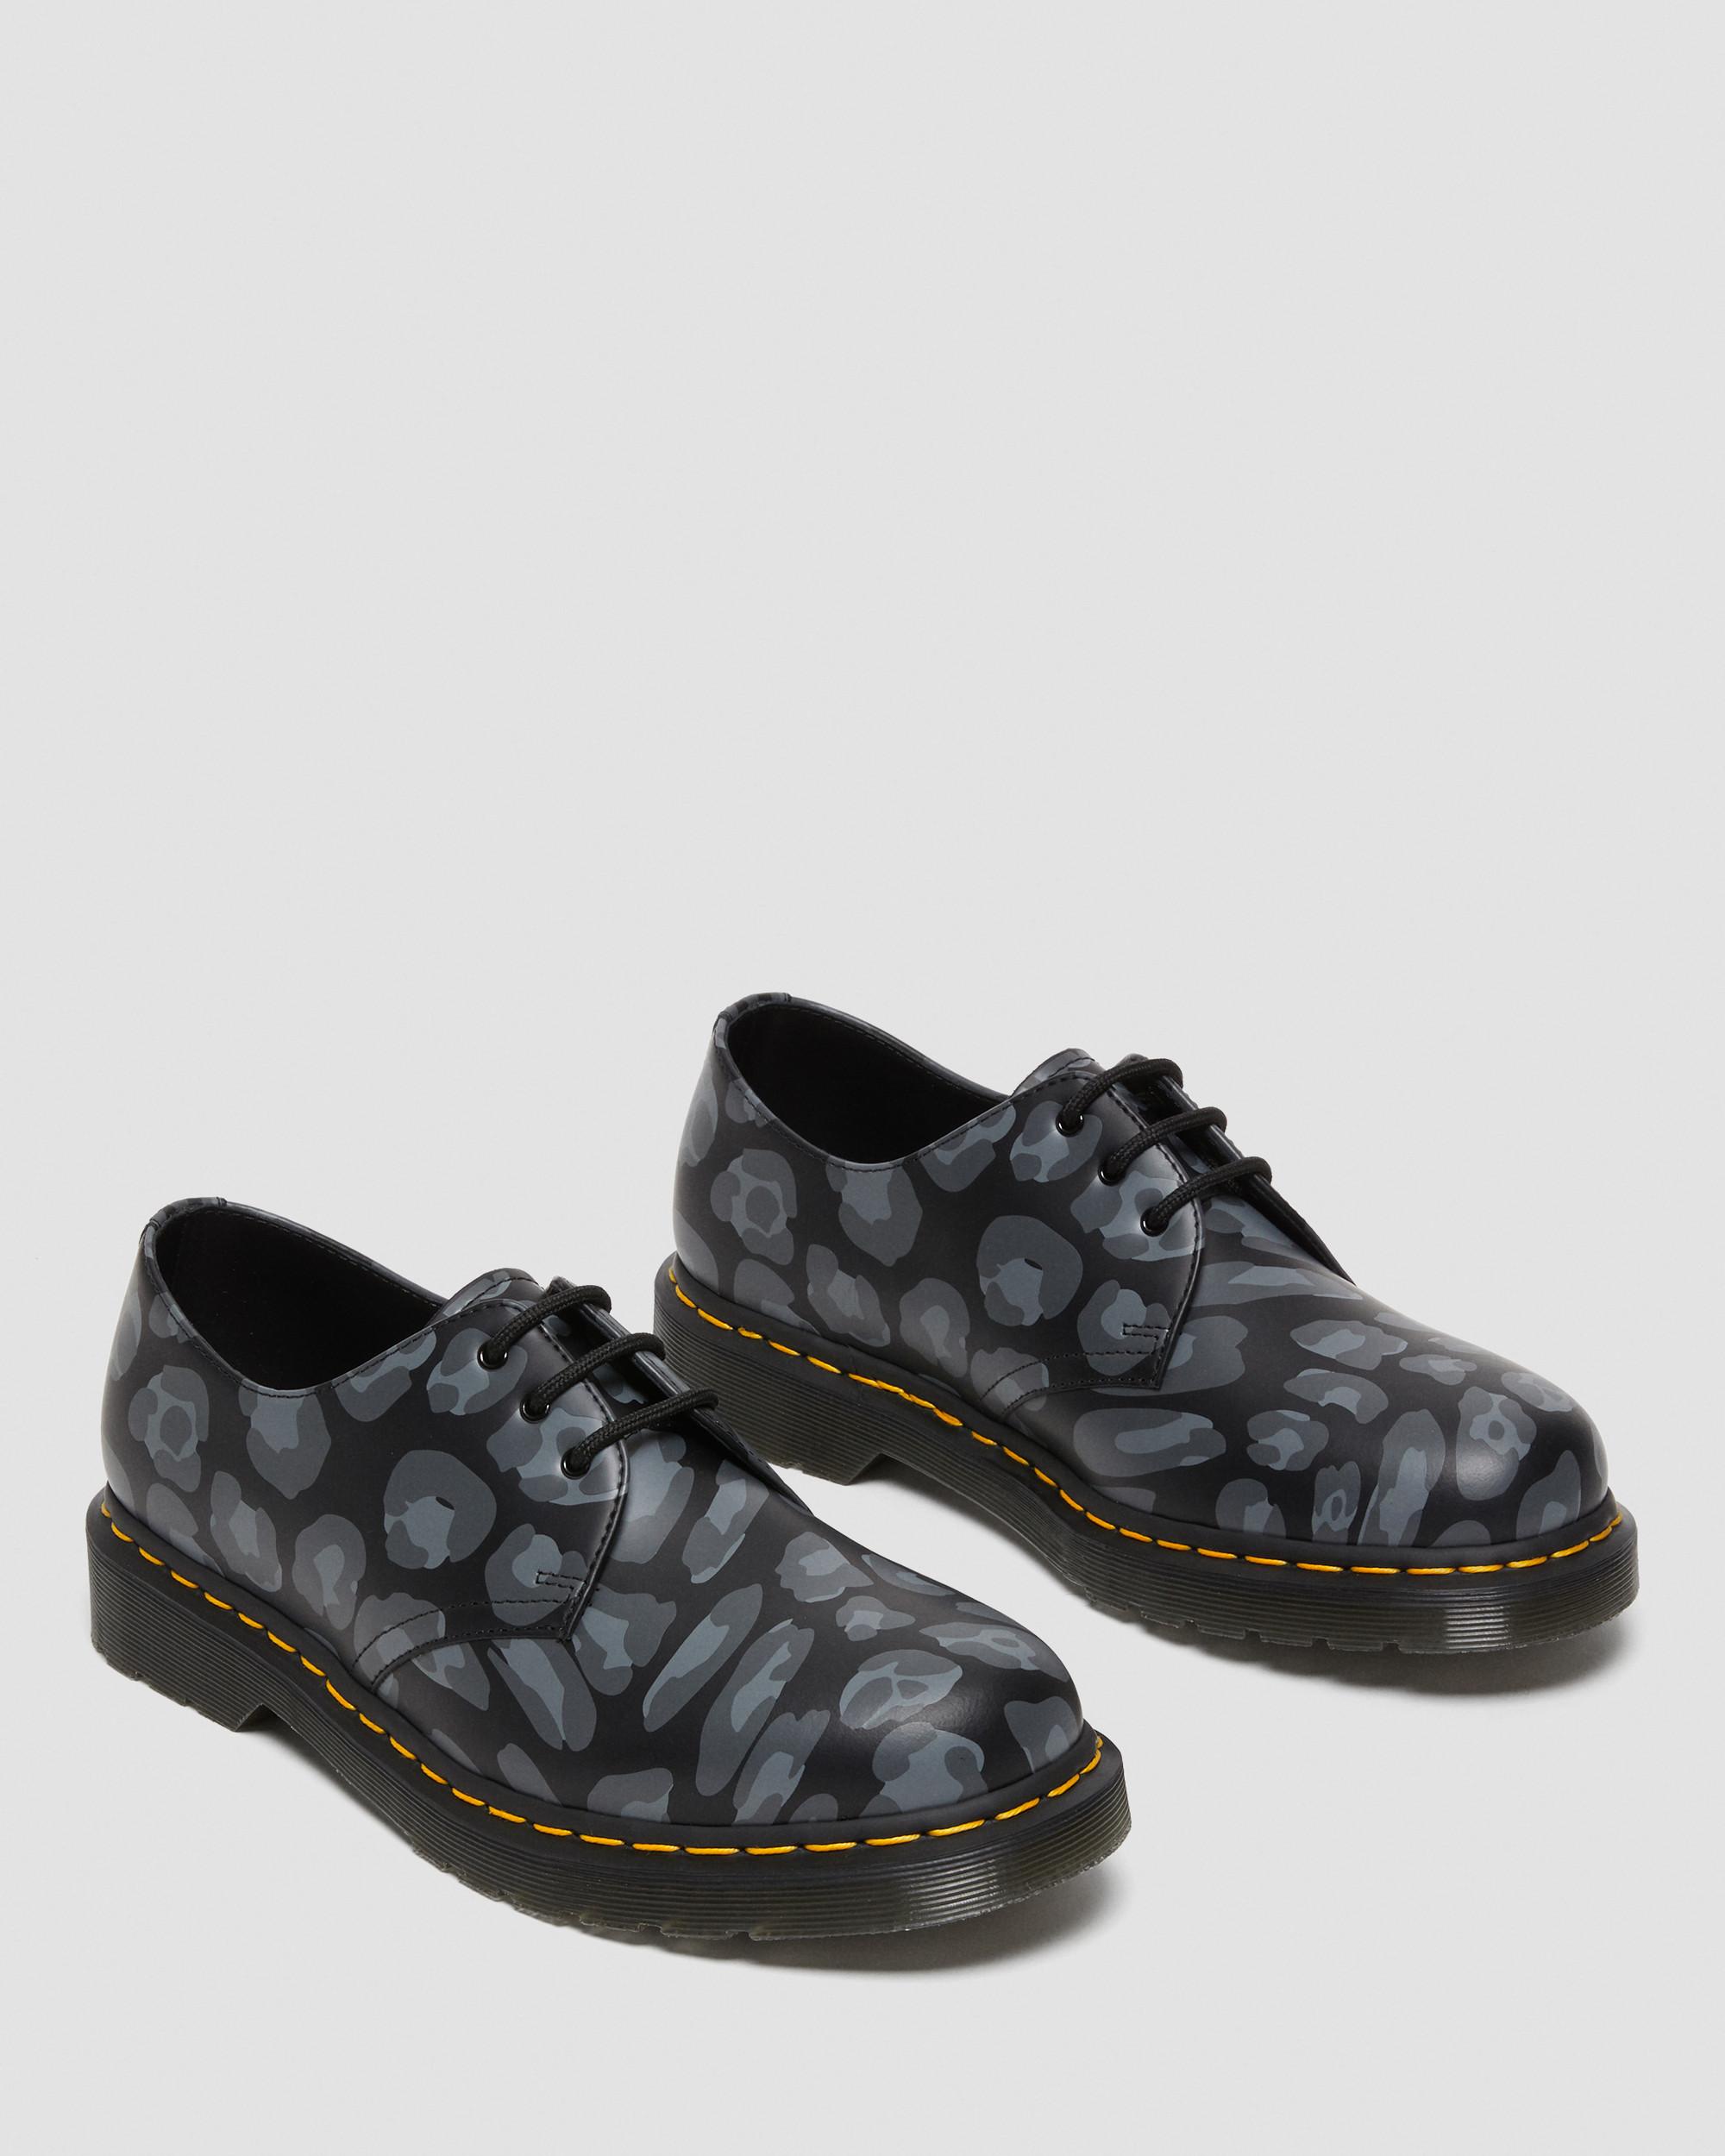 1461 Distorted Leopard Print Shoes in Black | Dr. Martens